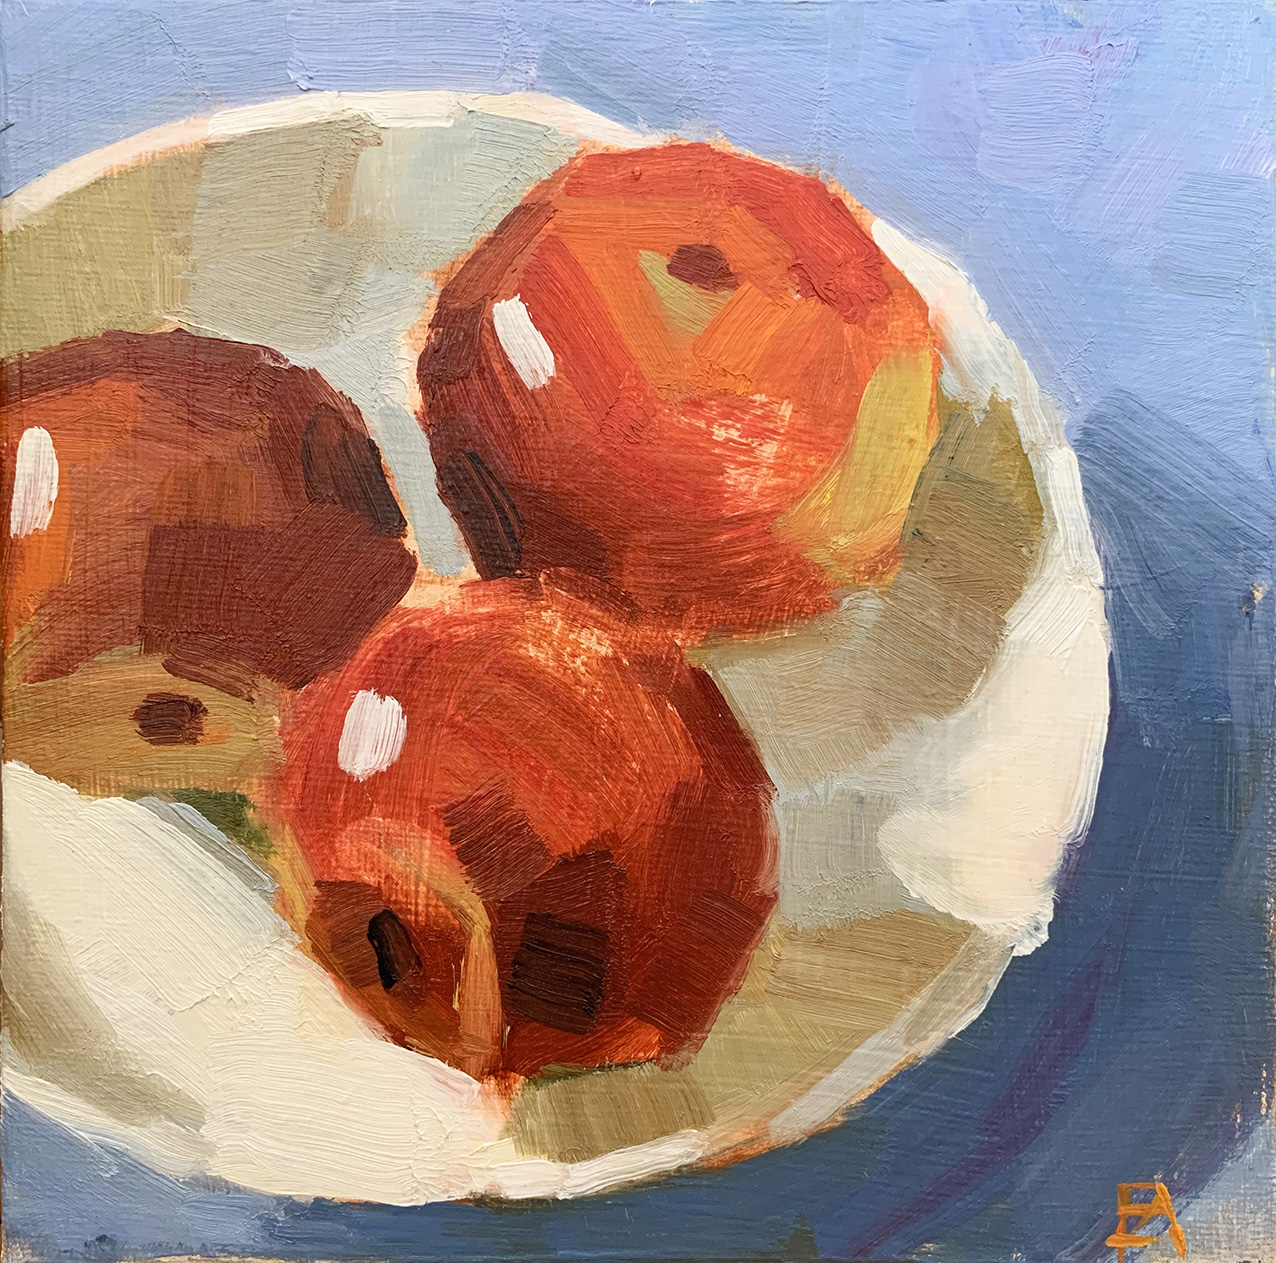   Three Apples   Oil on canvas 20 x 20 cm  2019 